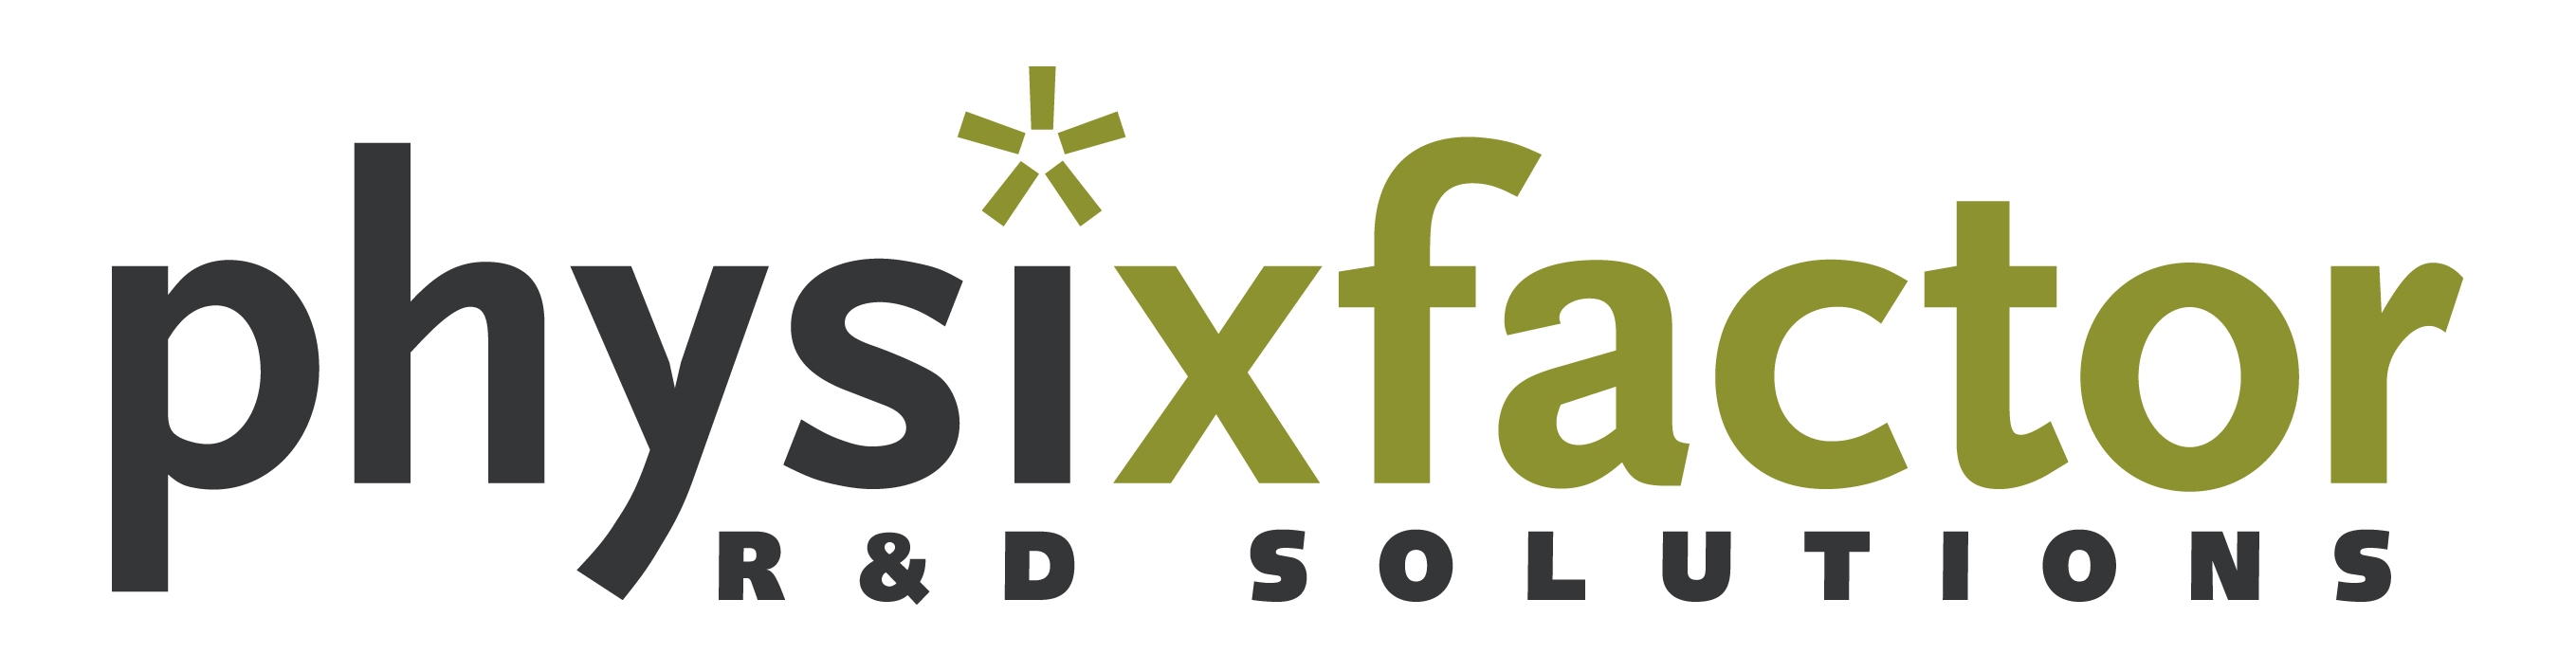 The Physixfactor logo.